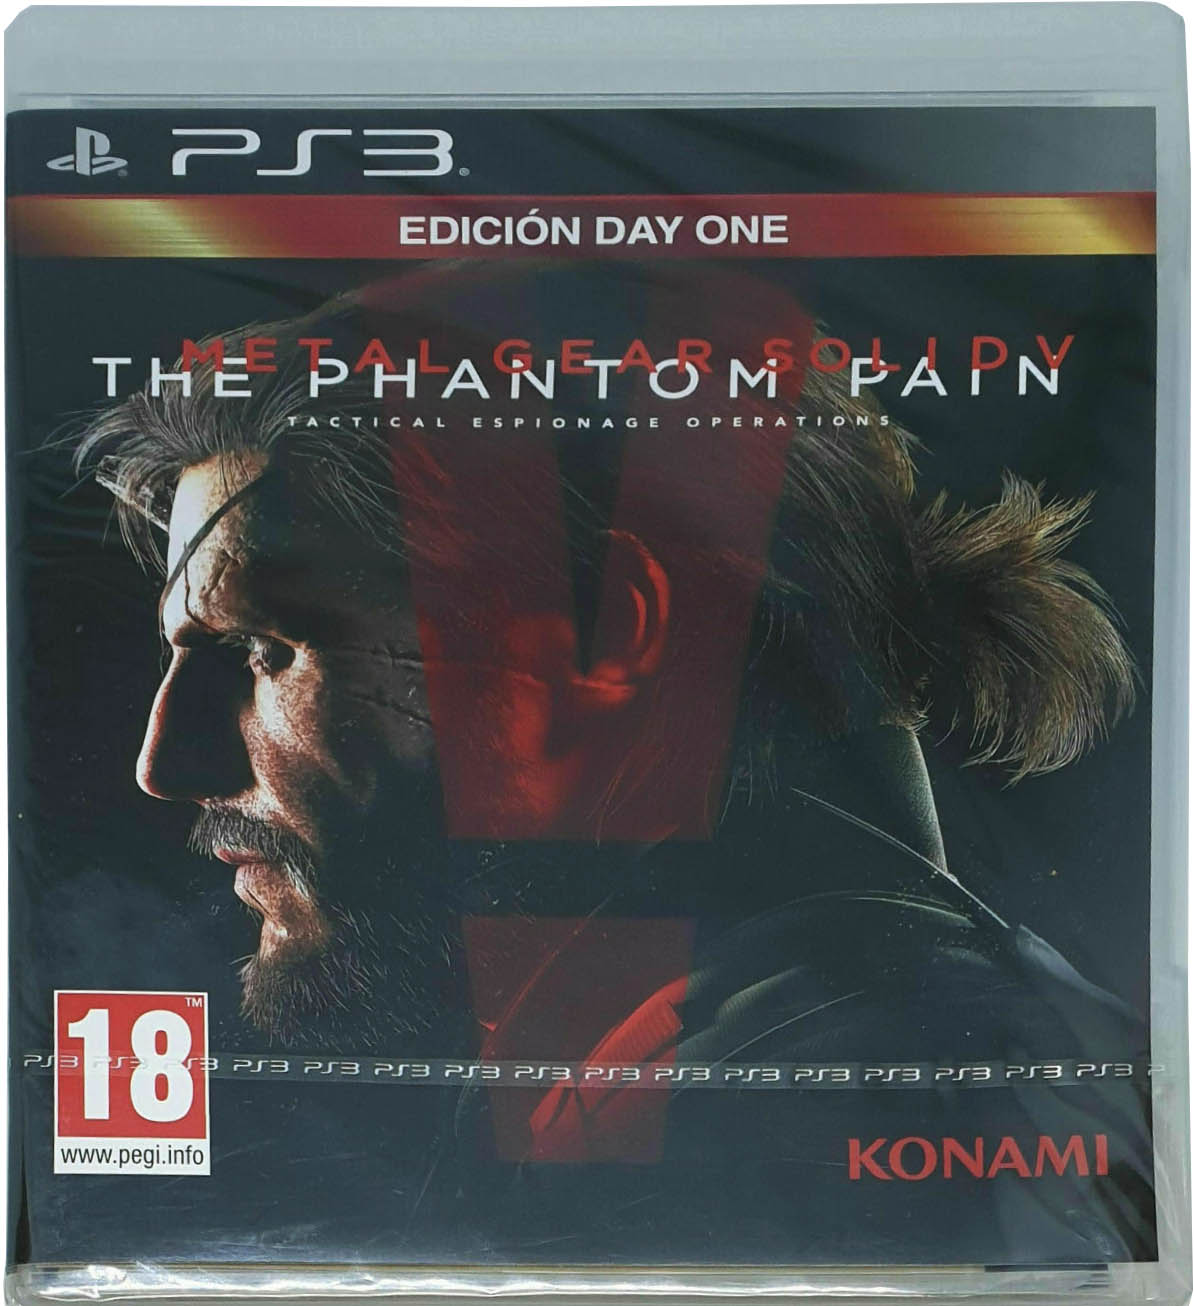 Metal Gear Solid V: The Phantom Pain (Edicion Day One) издание на PlayStation 3 в Испании